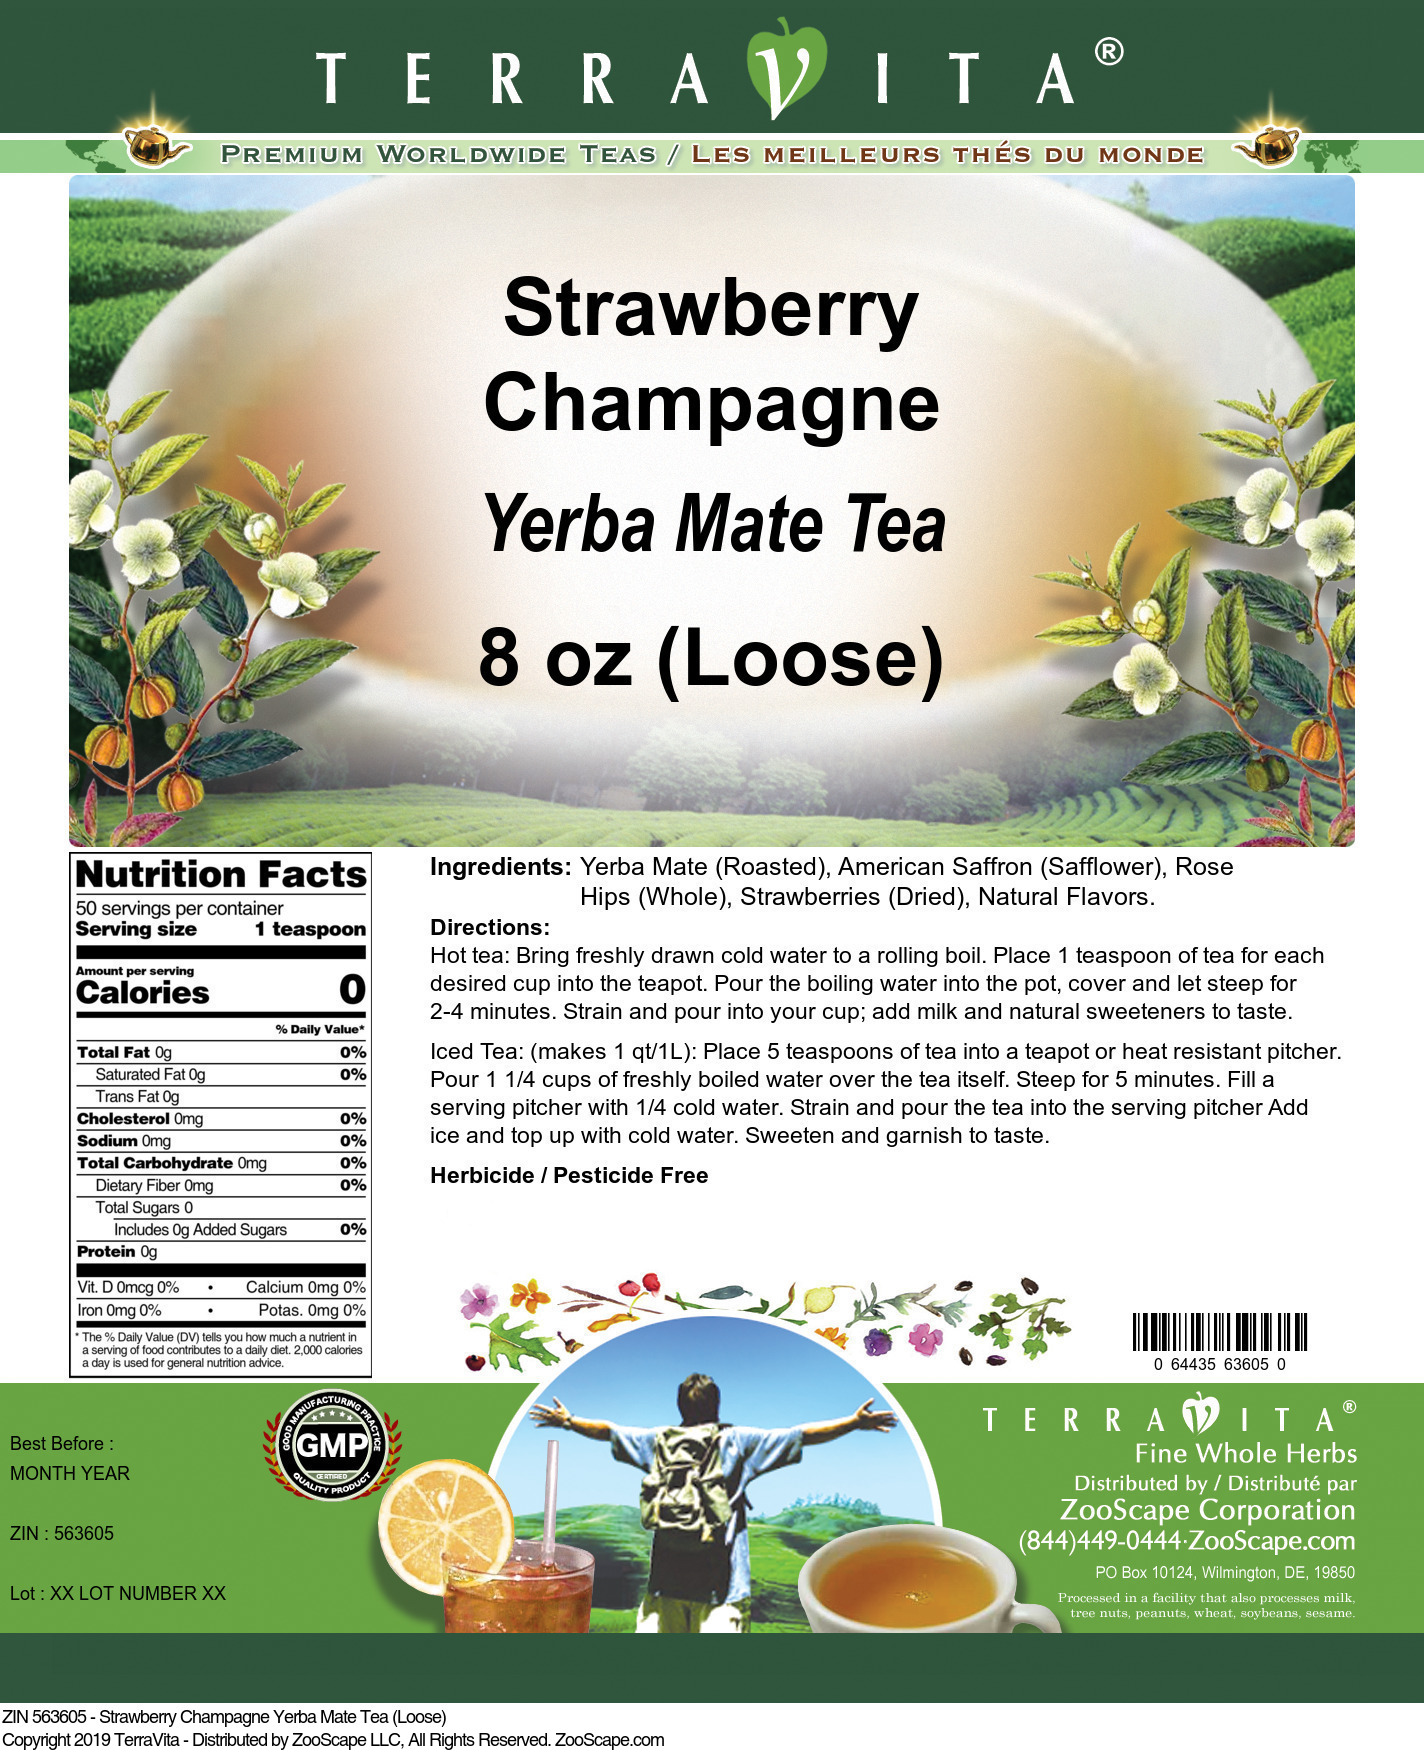 Strawberry Champagne Yerba Mate Tea (Loose) - Label